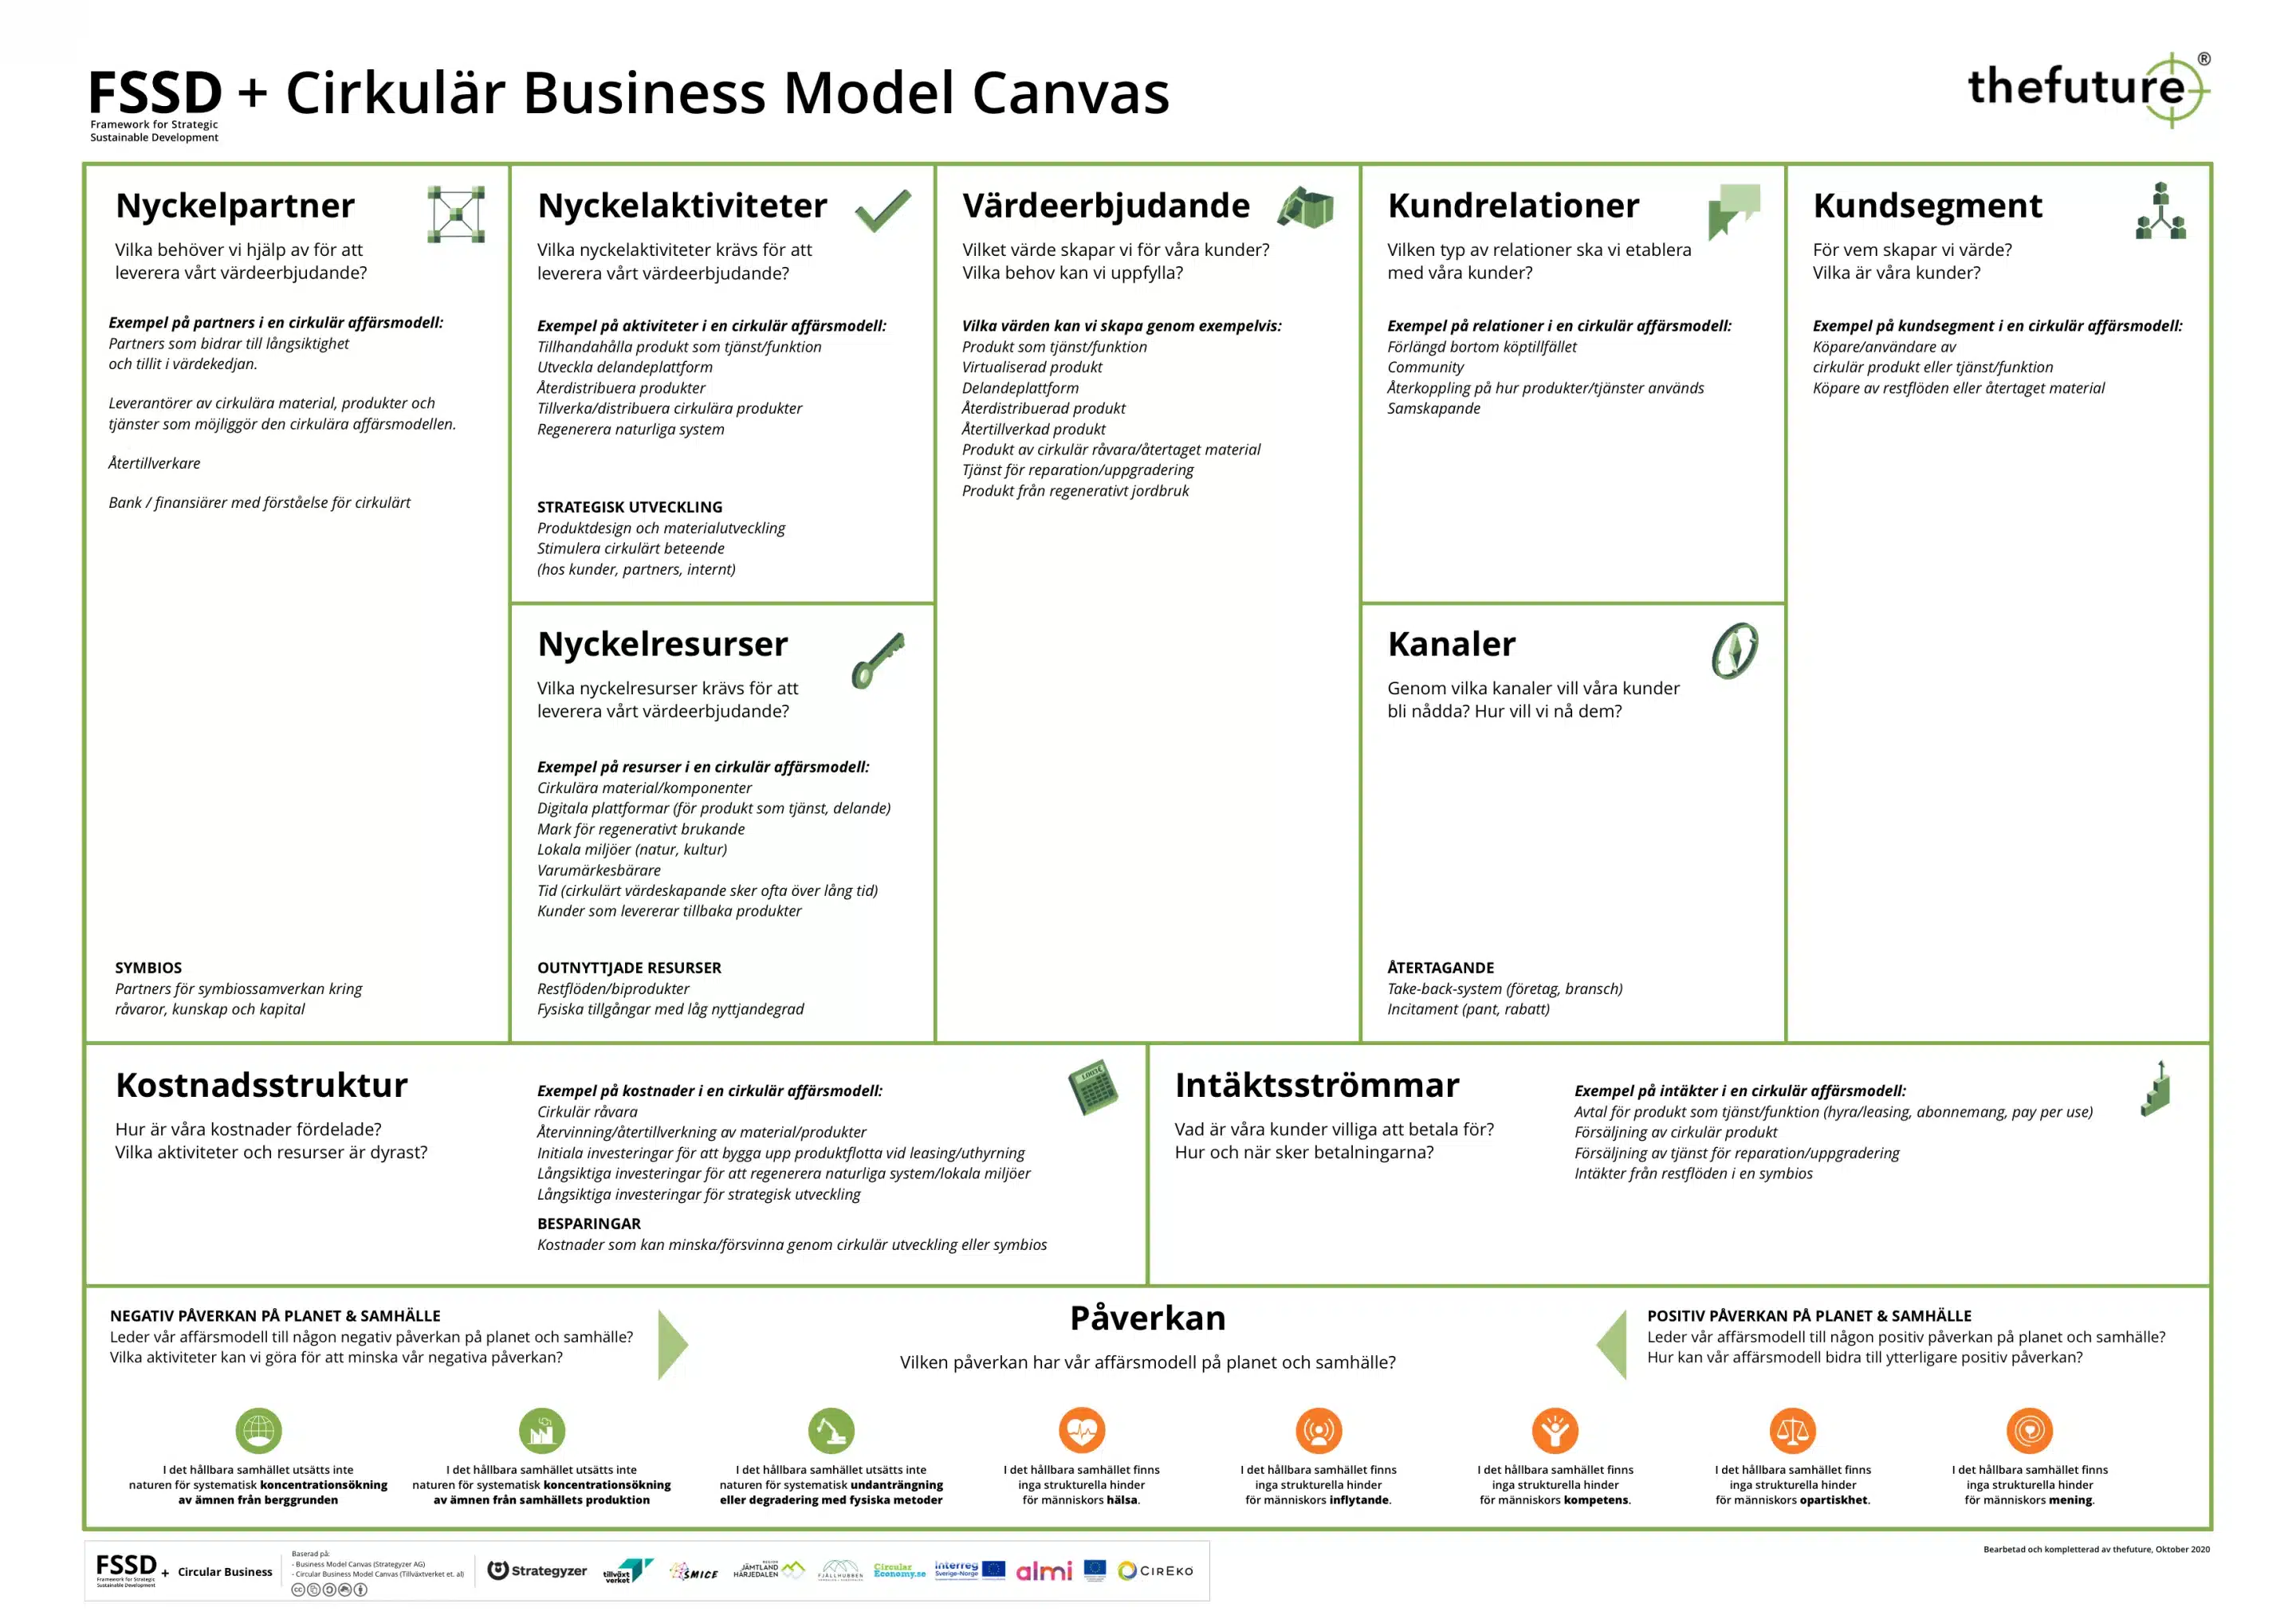 thefuture, FSSD+Circular Business Model Canvas 2.0, thefuture (A4)